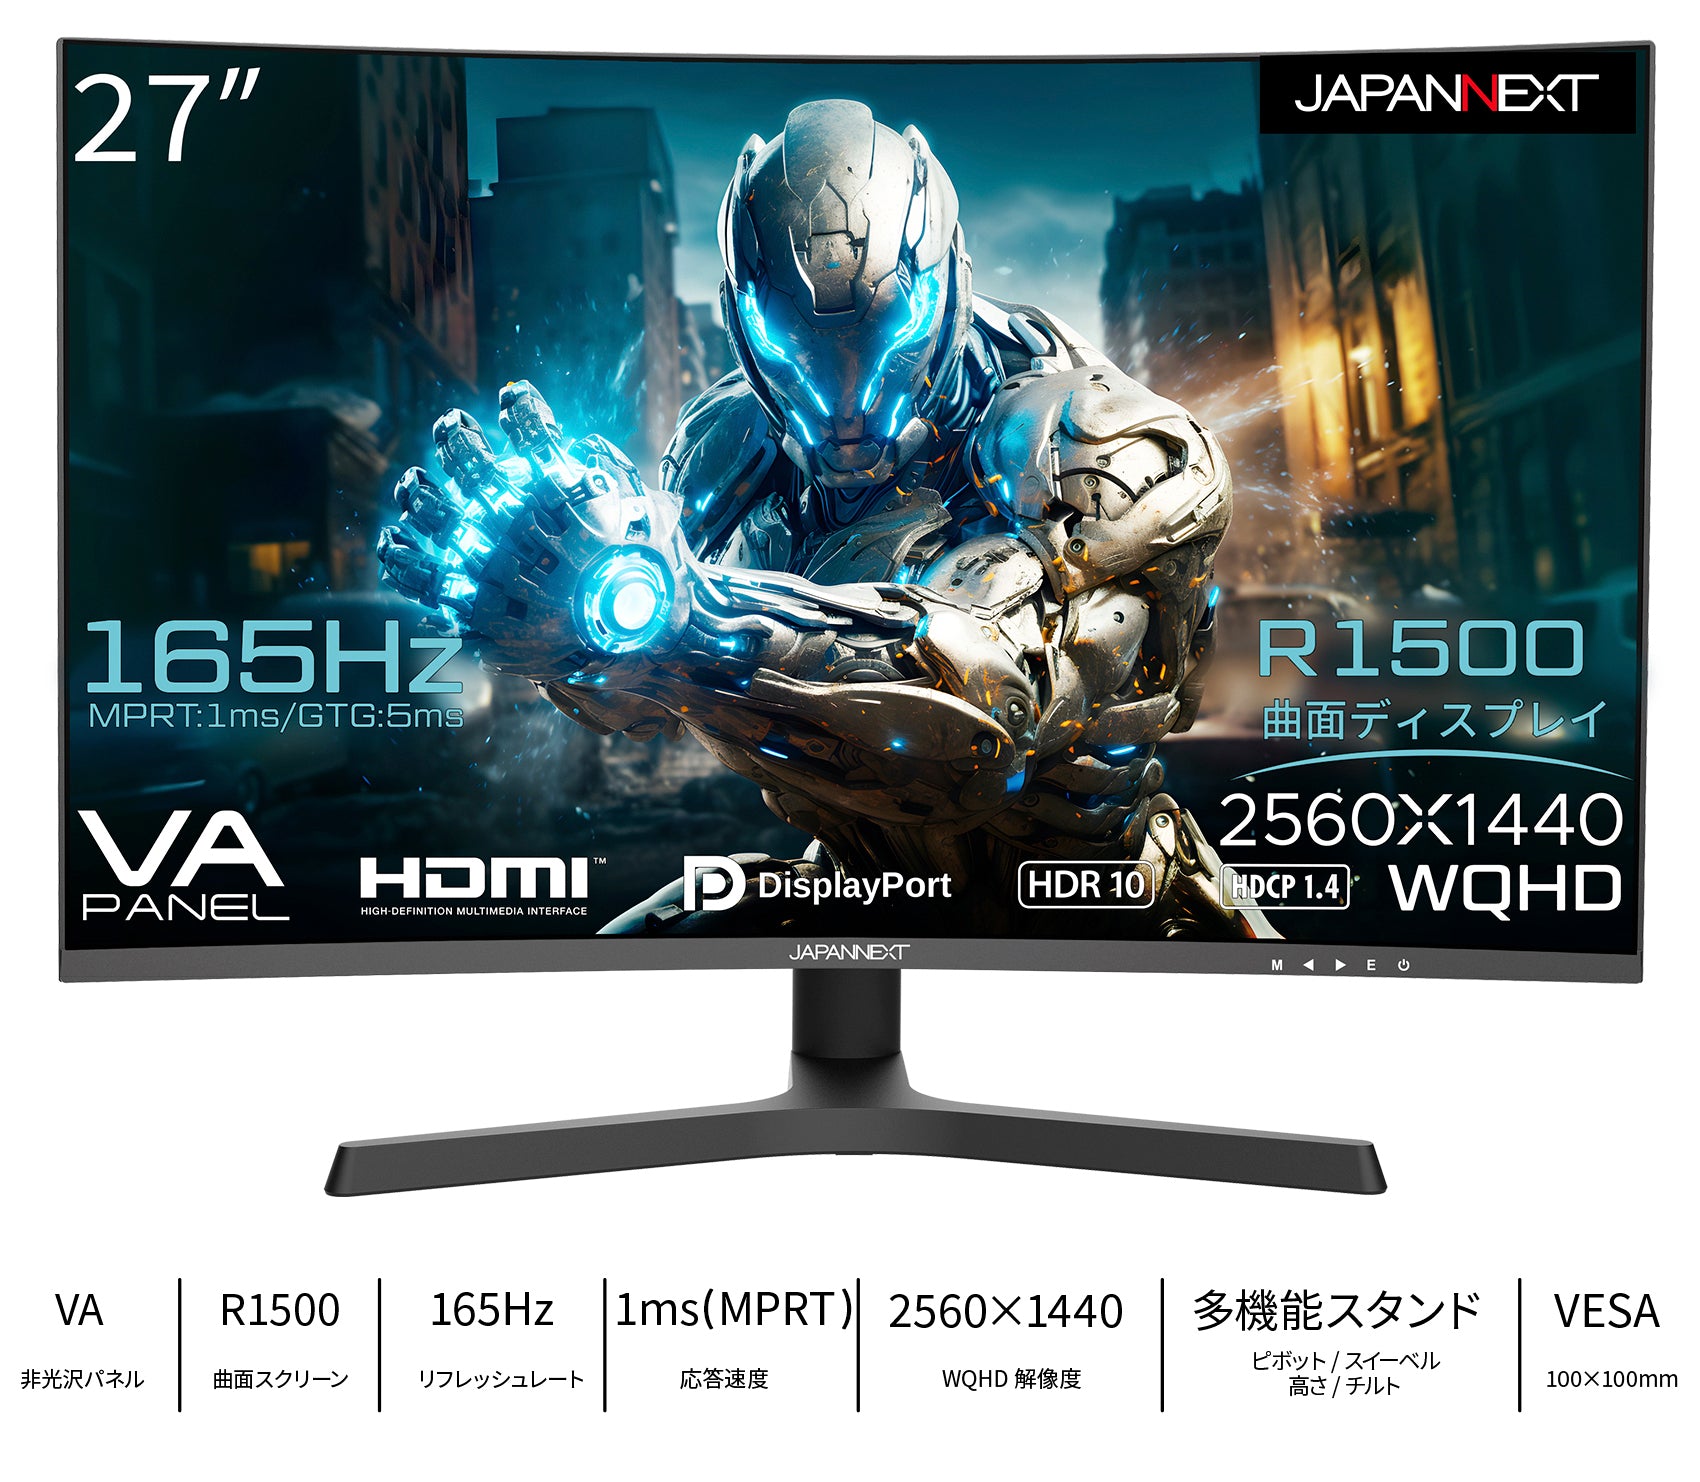 JAPANNEXT 27インチ 曲面 WQHD(2560 x 1440) 165Hz 液晶モニター JN